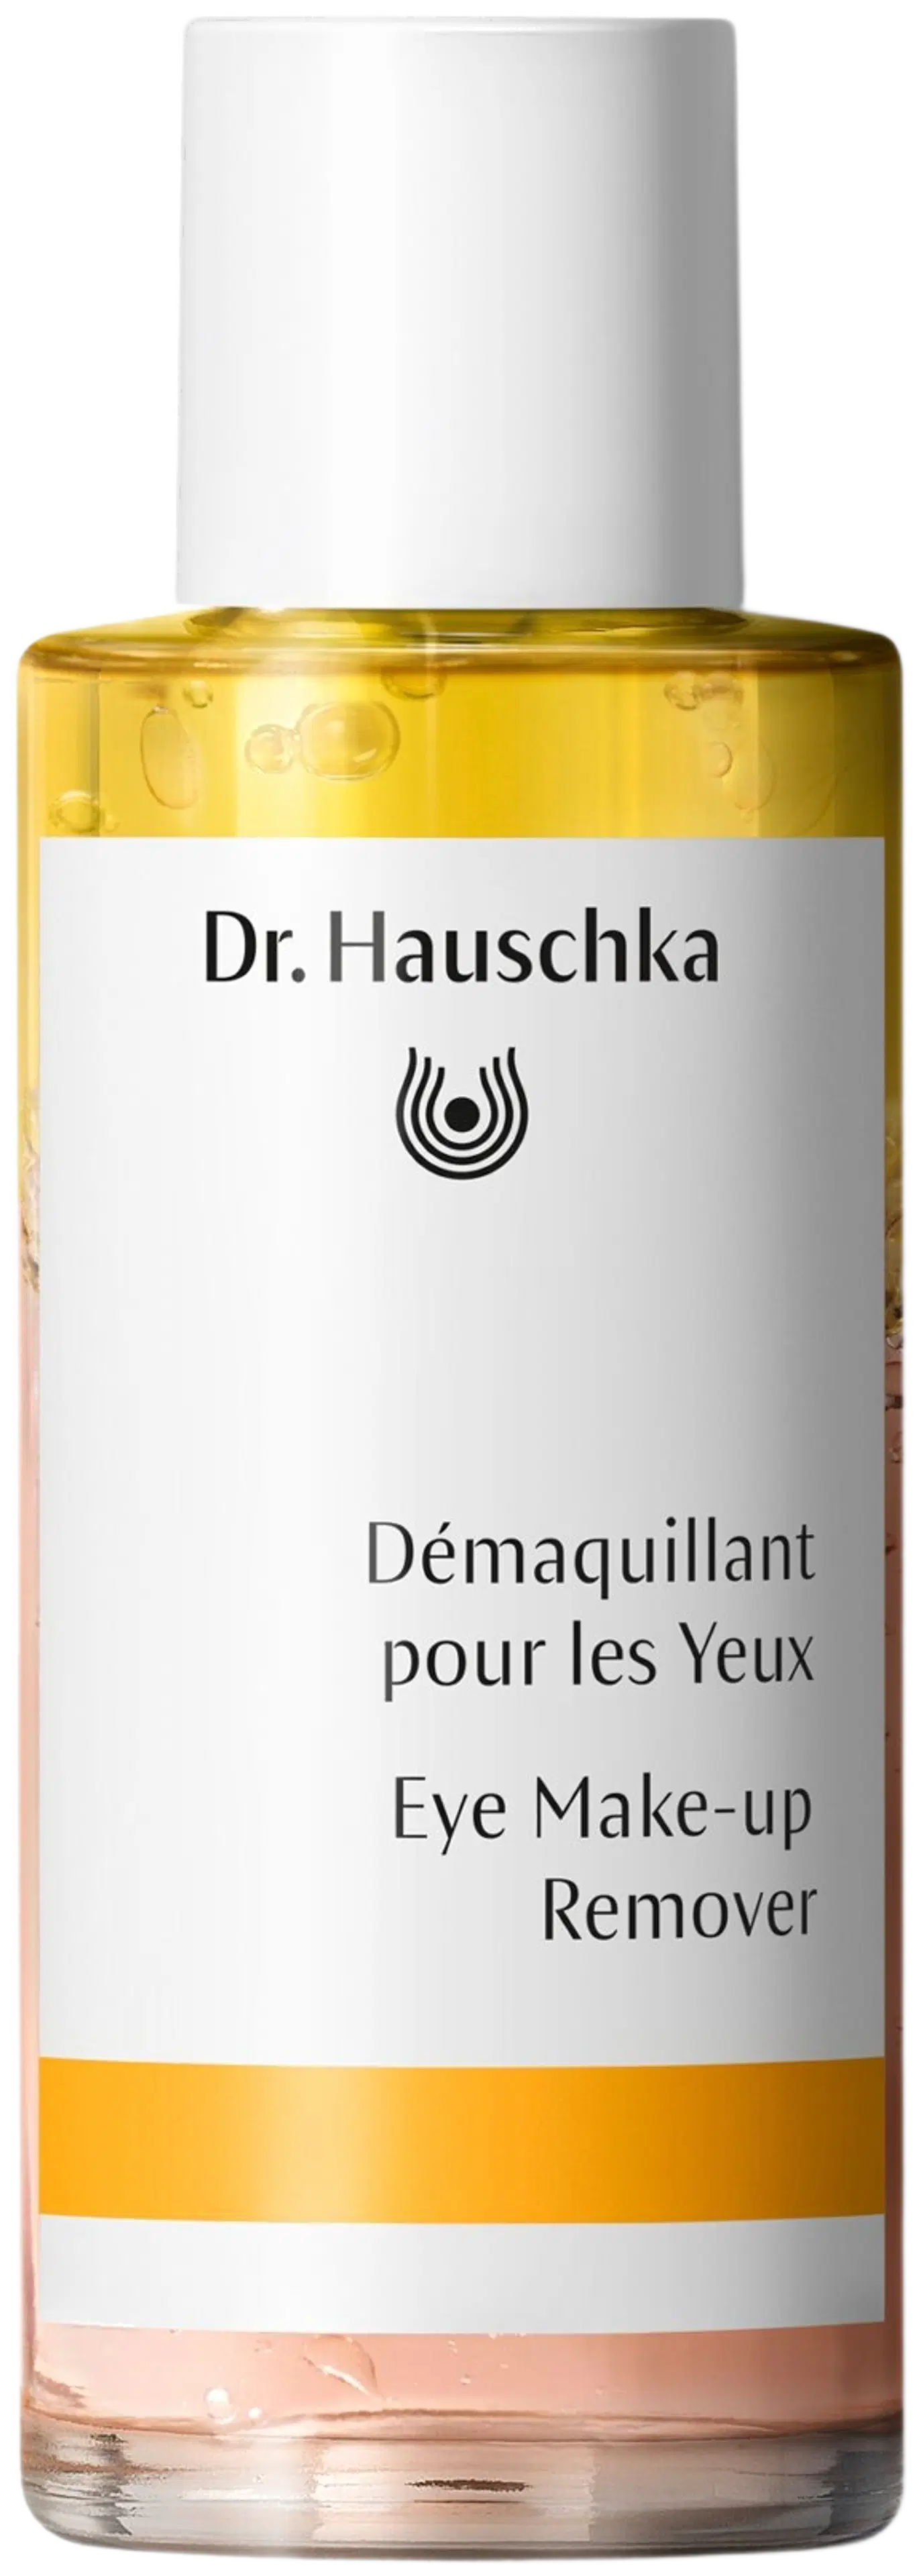 Dr. Hauschka Eye Make-up Remover silmämeikinpoistoaine 75 ml